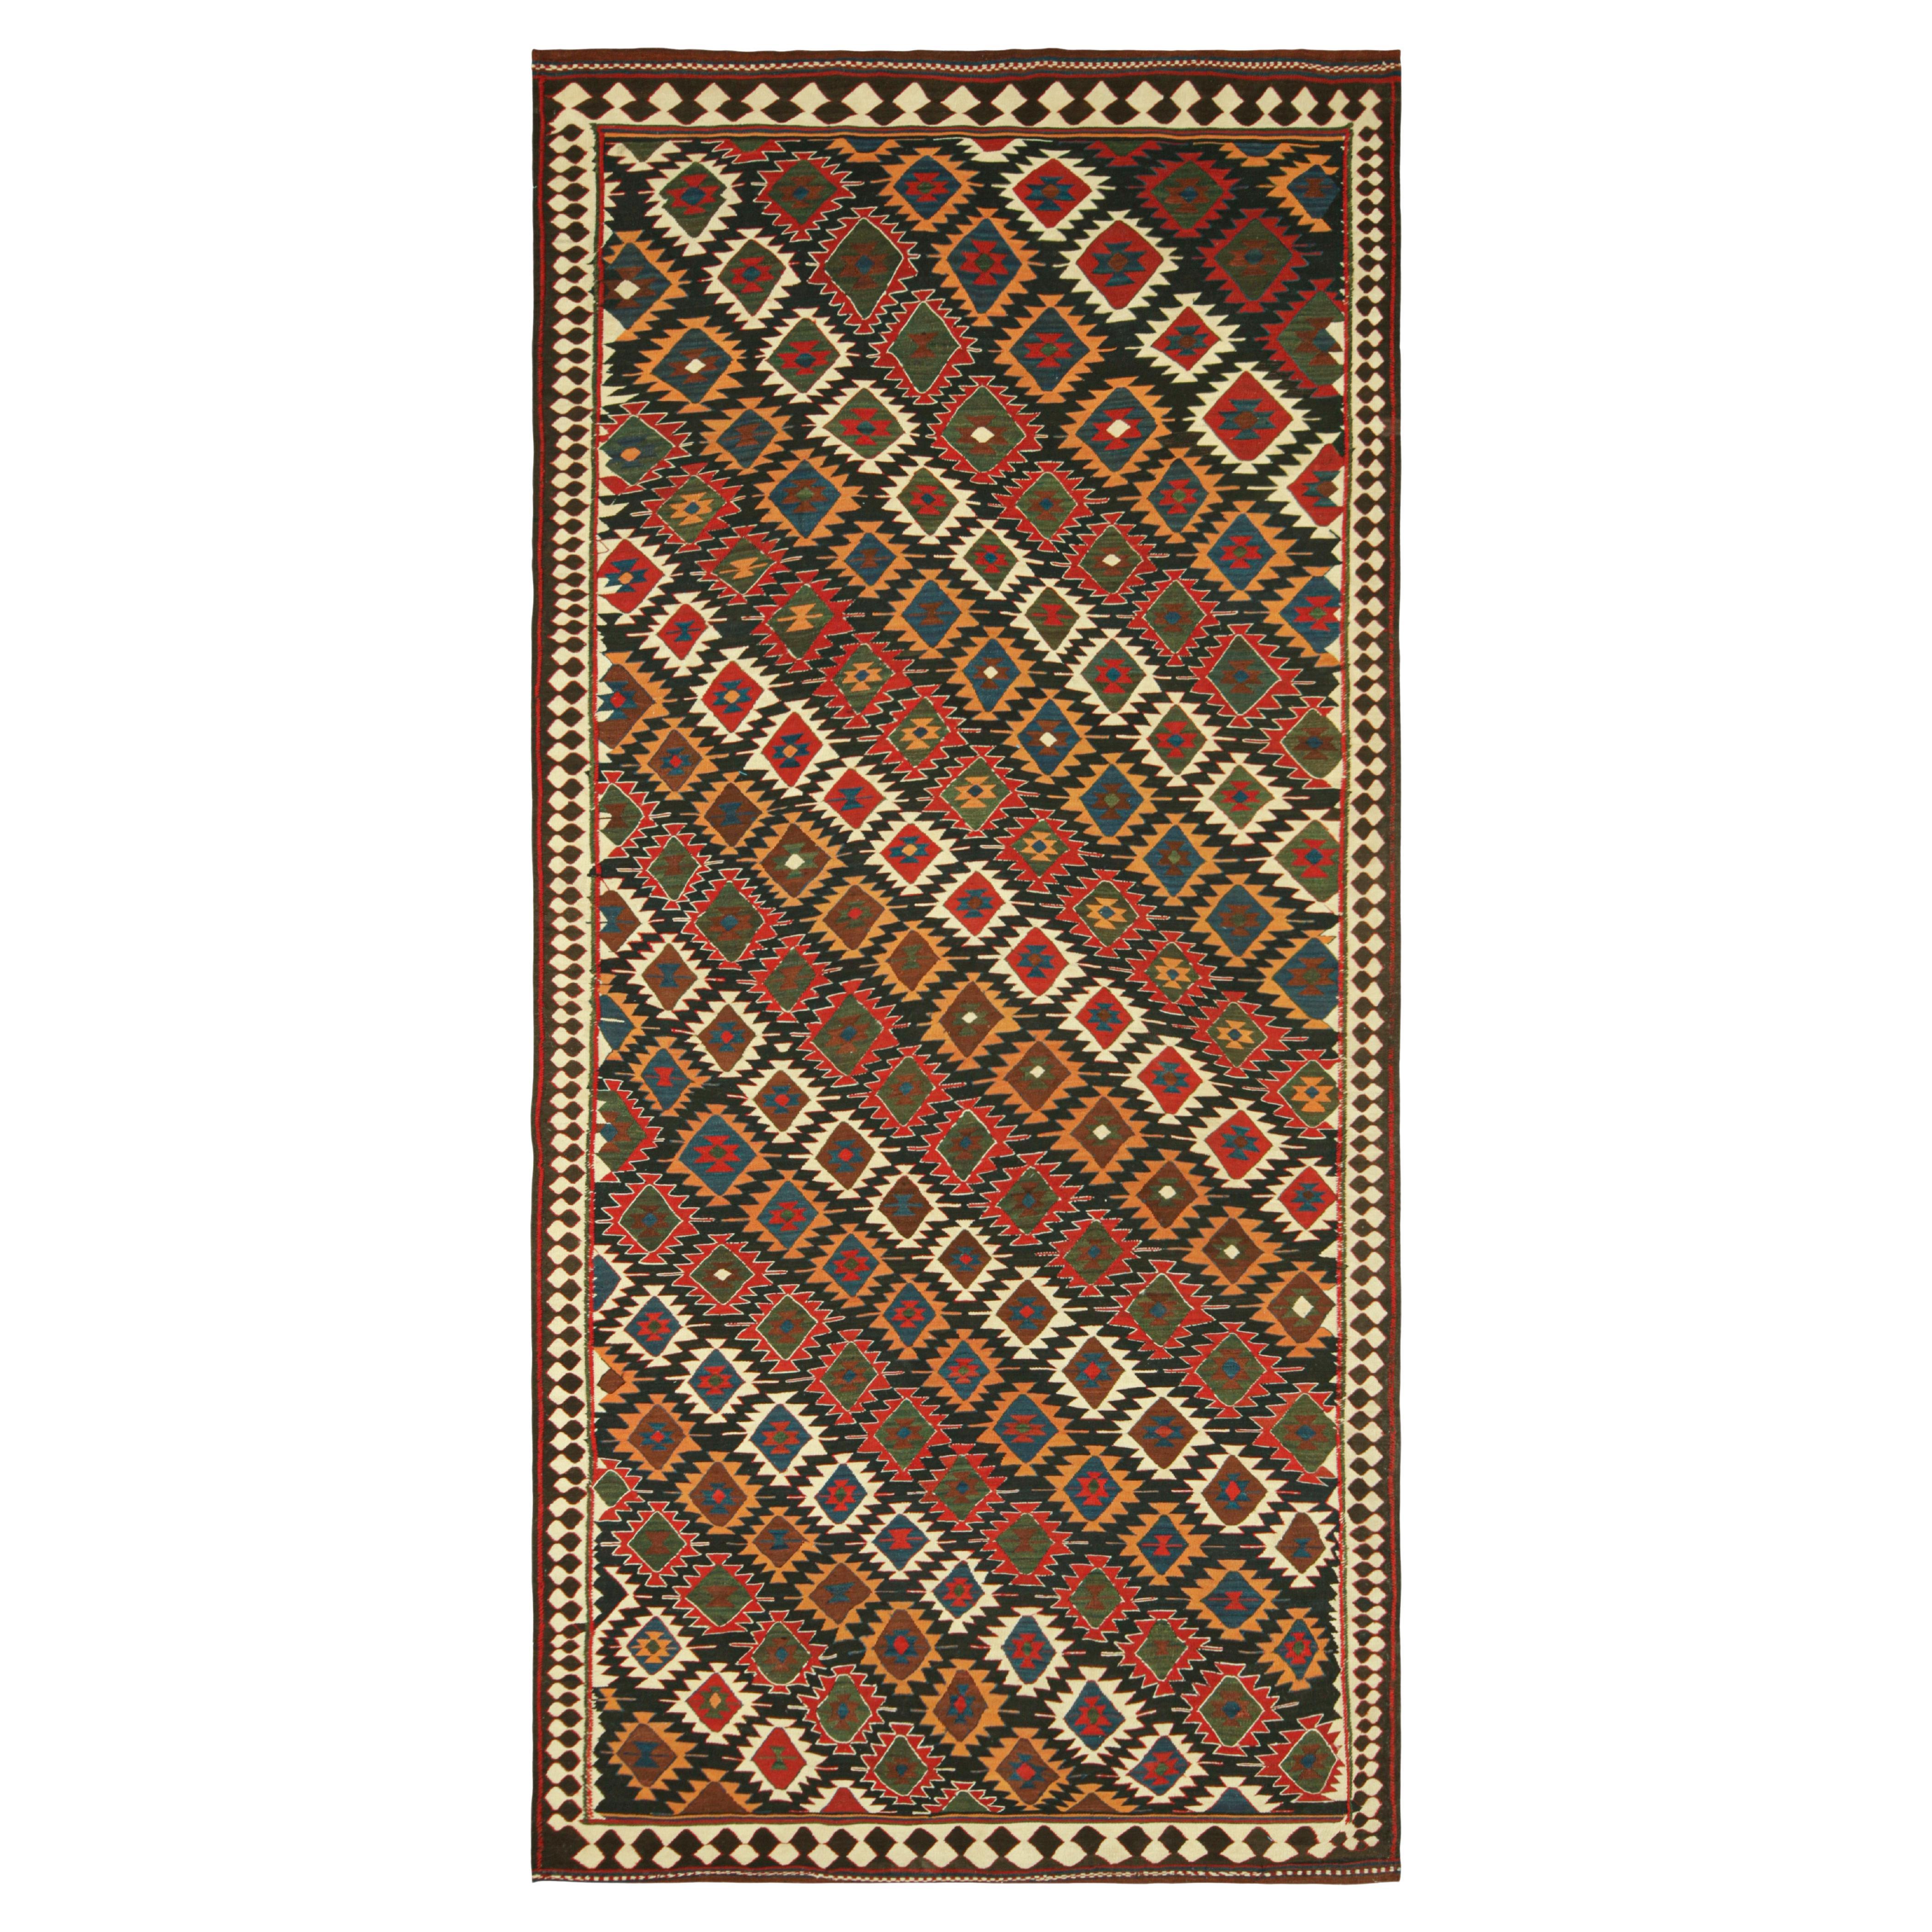 Vintage Kilim with Tribal Geometric Patterns, from Rug & Kilim